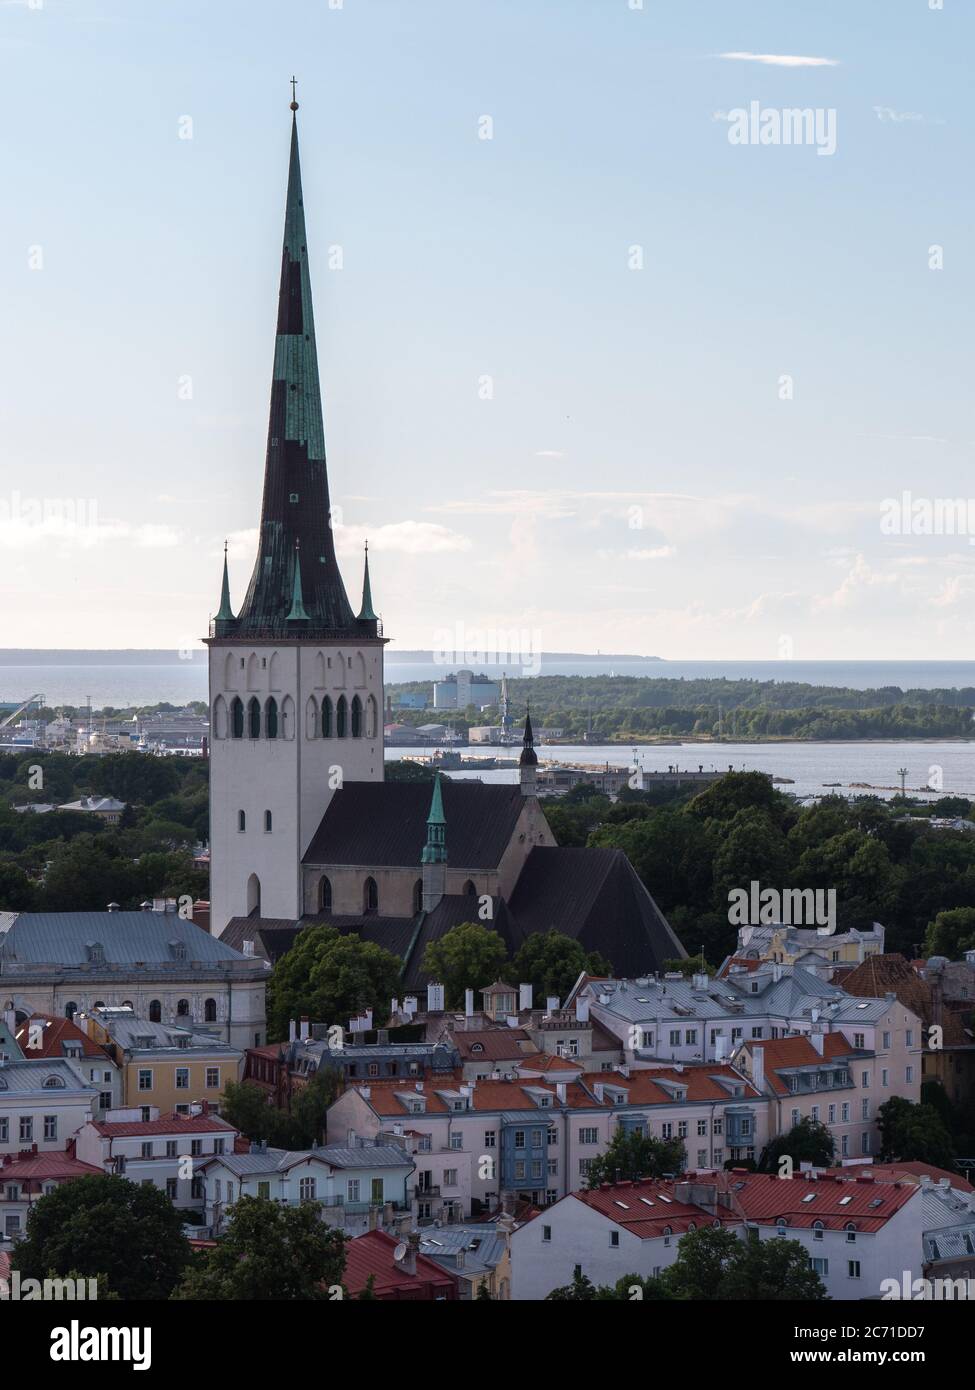 Aerial view of city Tallinn Estonia business district Stock Photo